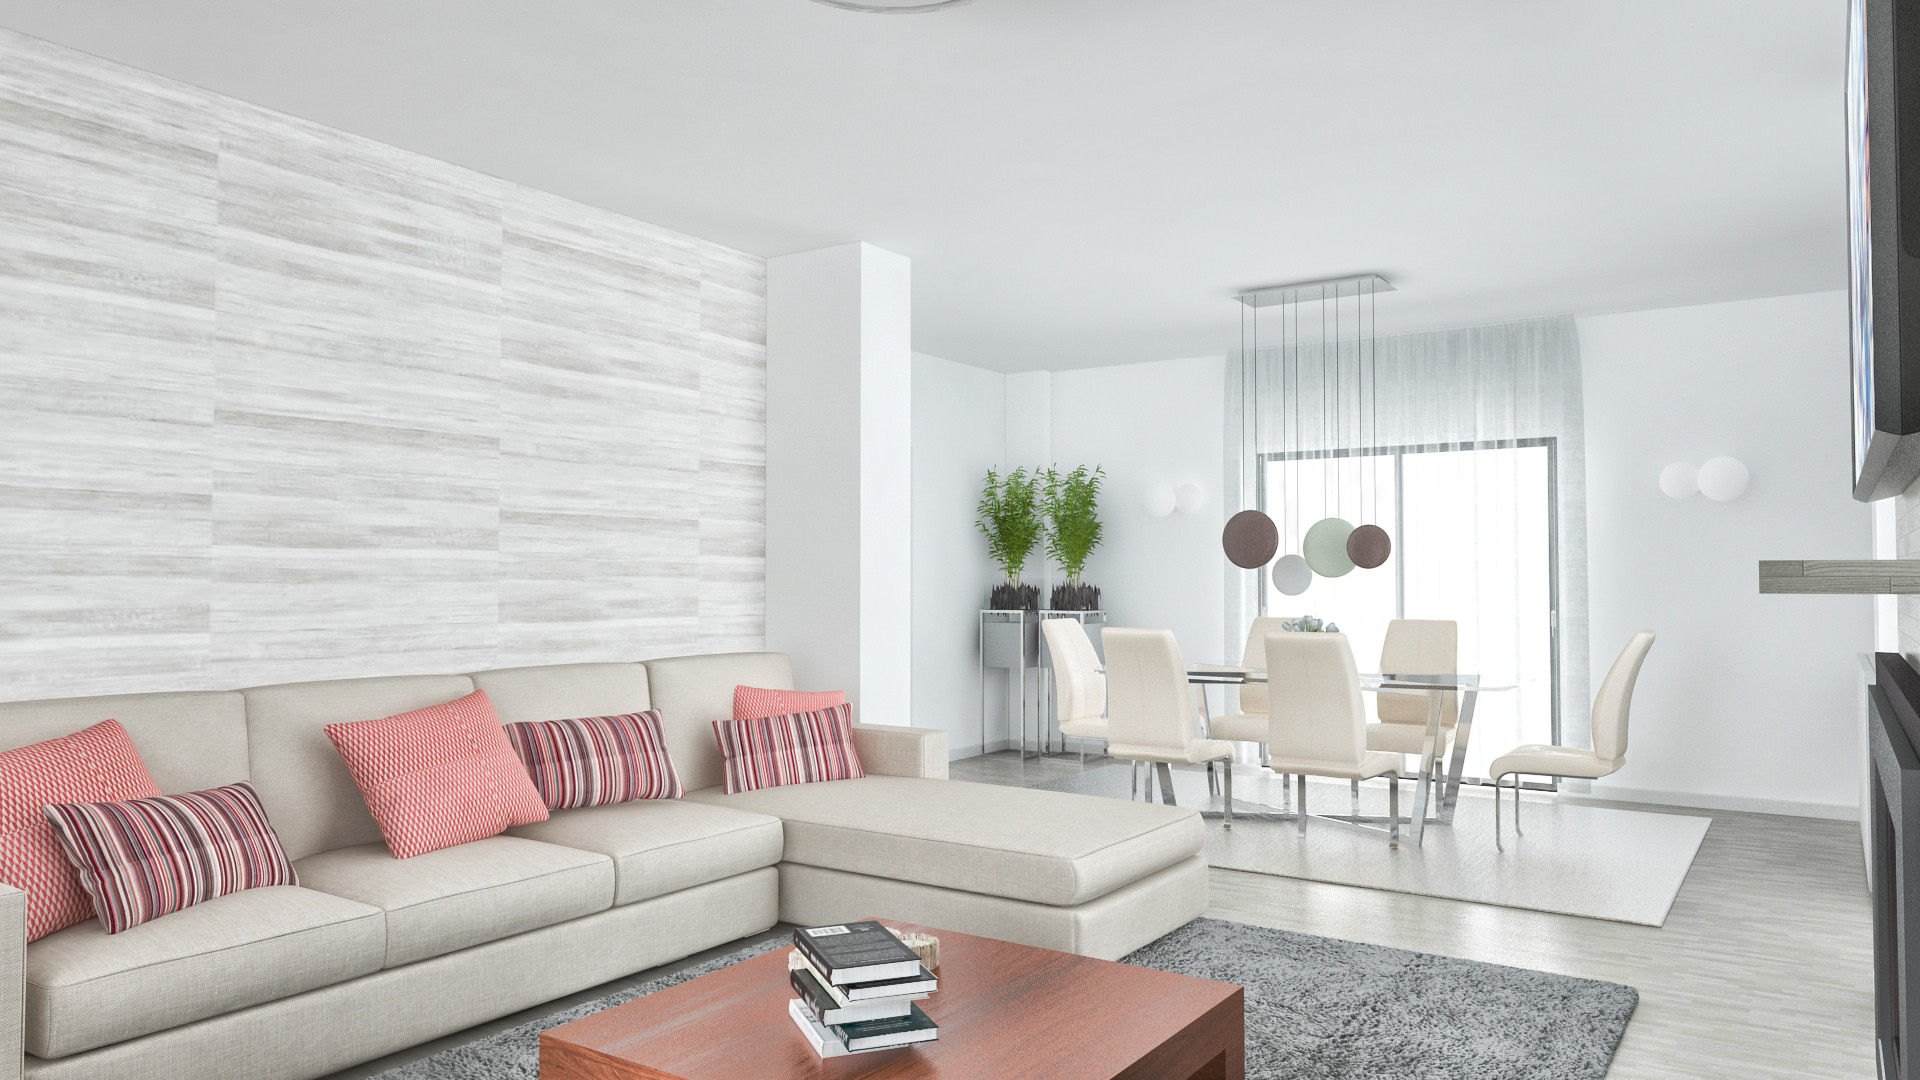 PROJETOS: 3D, INTERDOBLE BY MARTA SILVA - Design de Interiores INTERDOBLE BY MARTA SILVA - Design de Interiores Living room